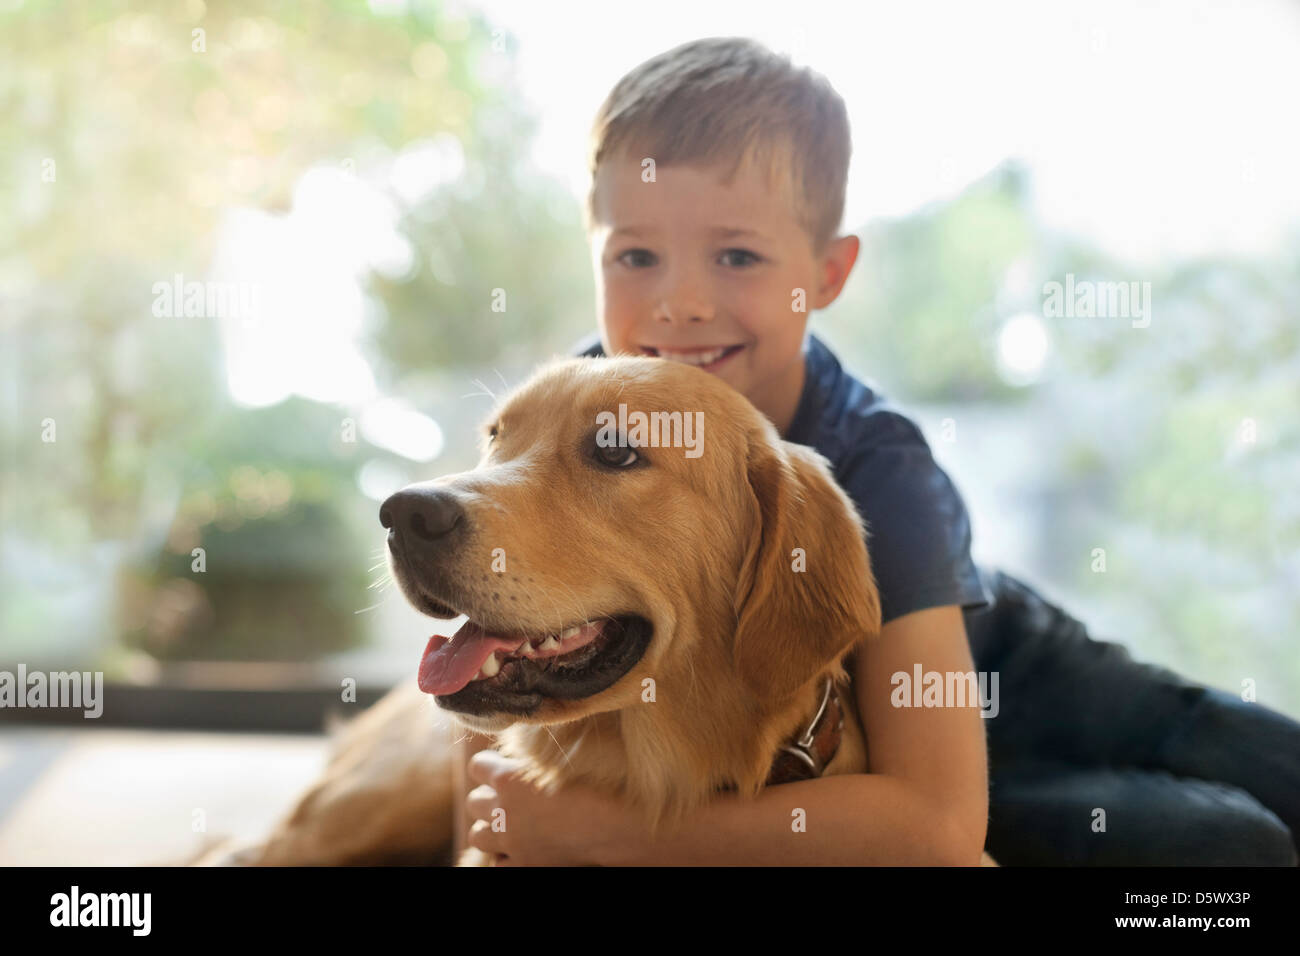 Smiling boy hugging dog indoors Stock Photo